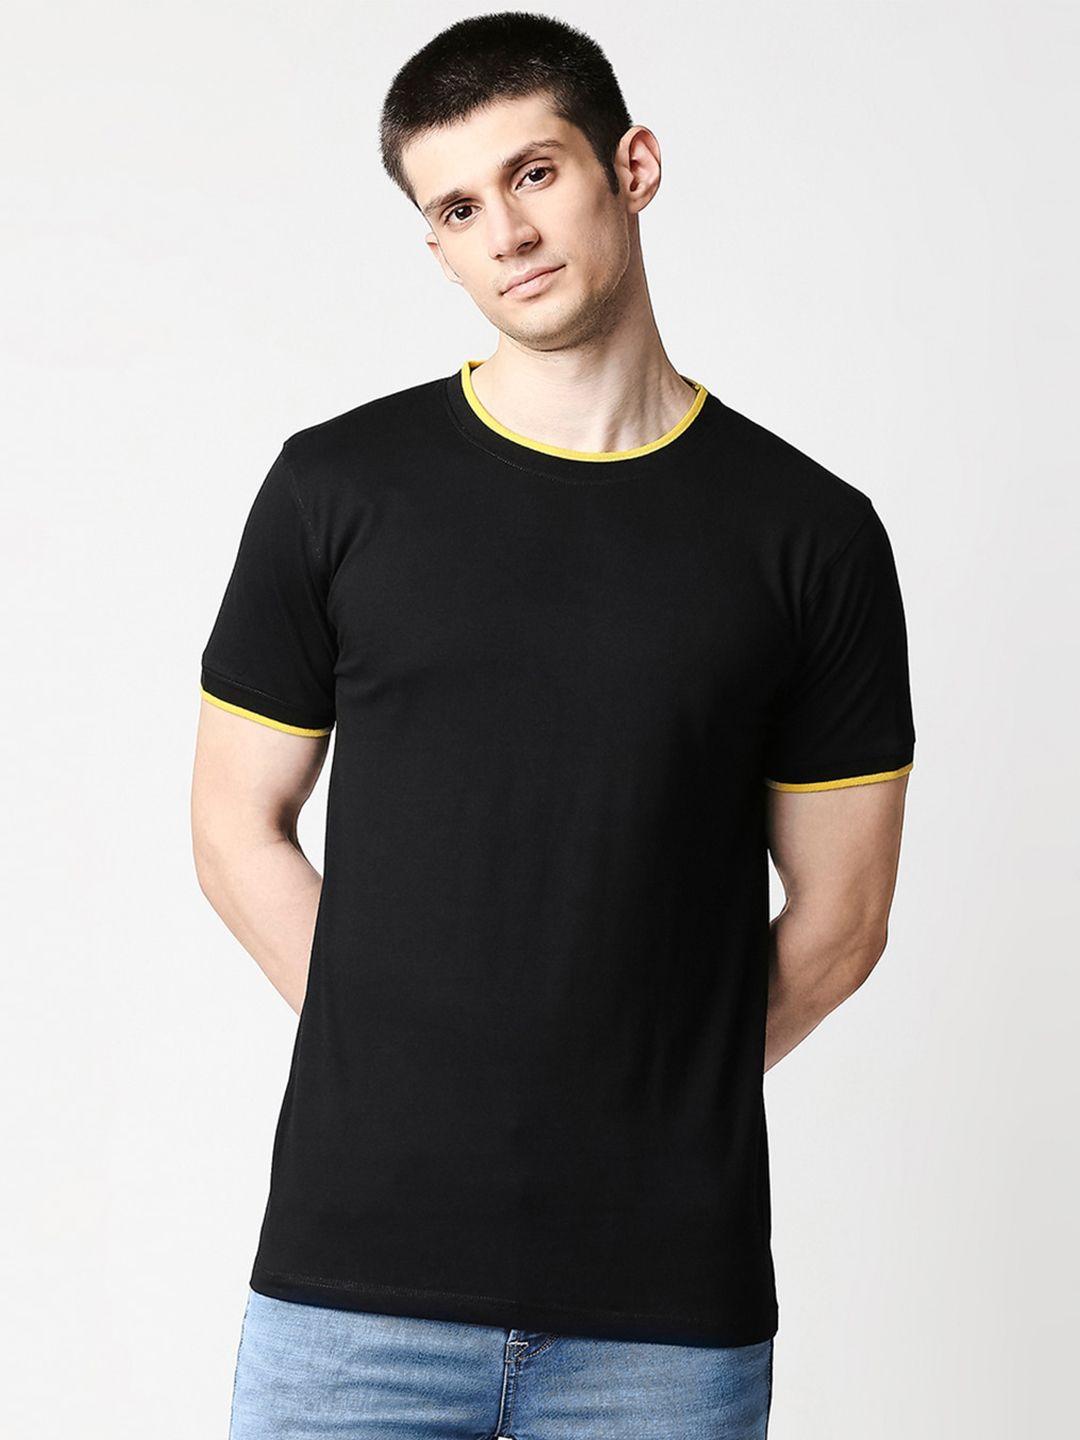 bewakoof-men-black-t-shirt